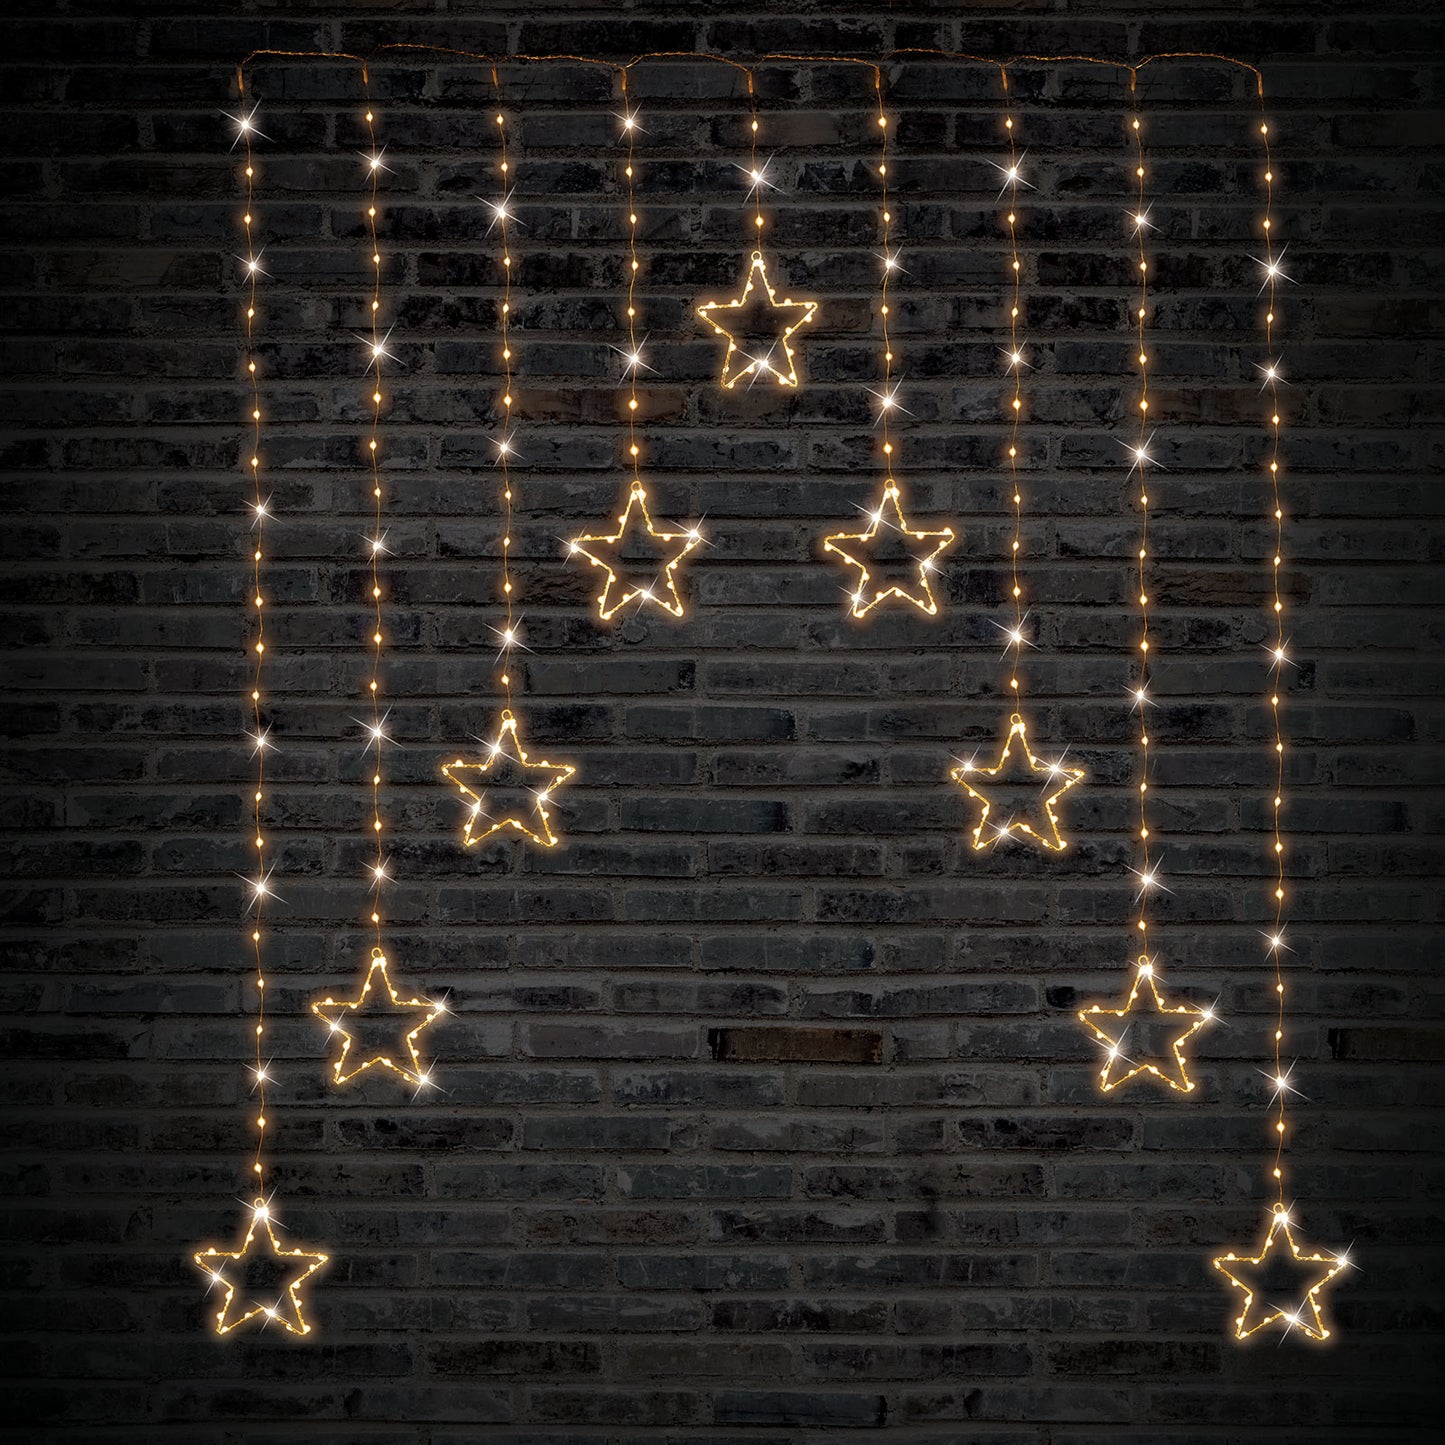 Stockholm Christmas Lights 307 LEDs Curtain Star Warm White